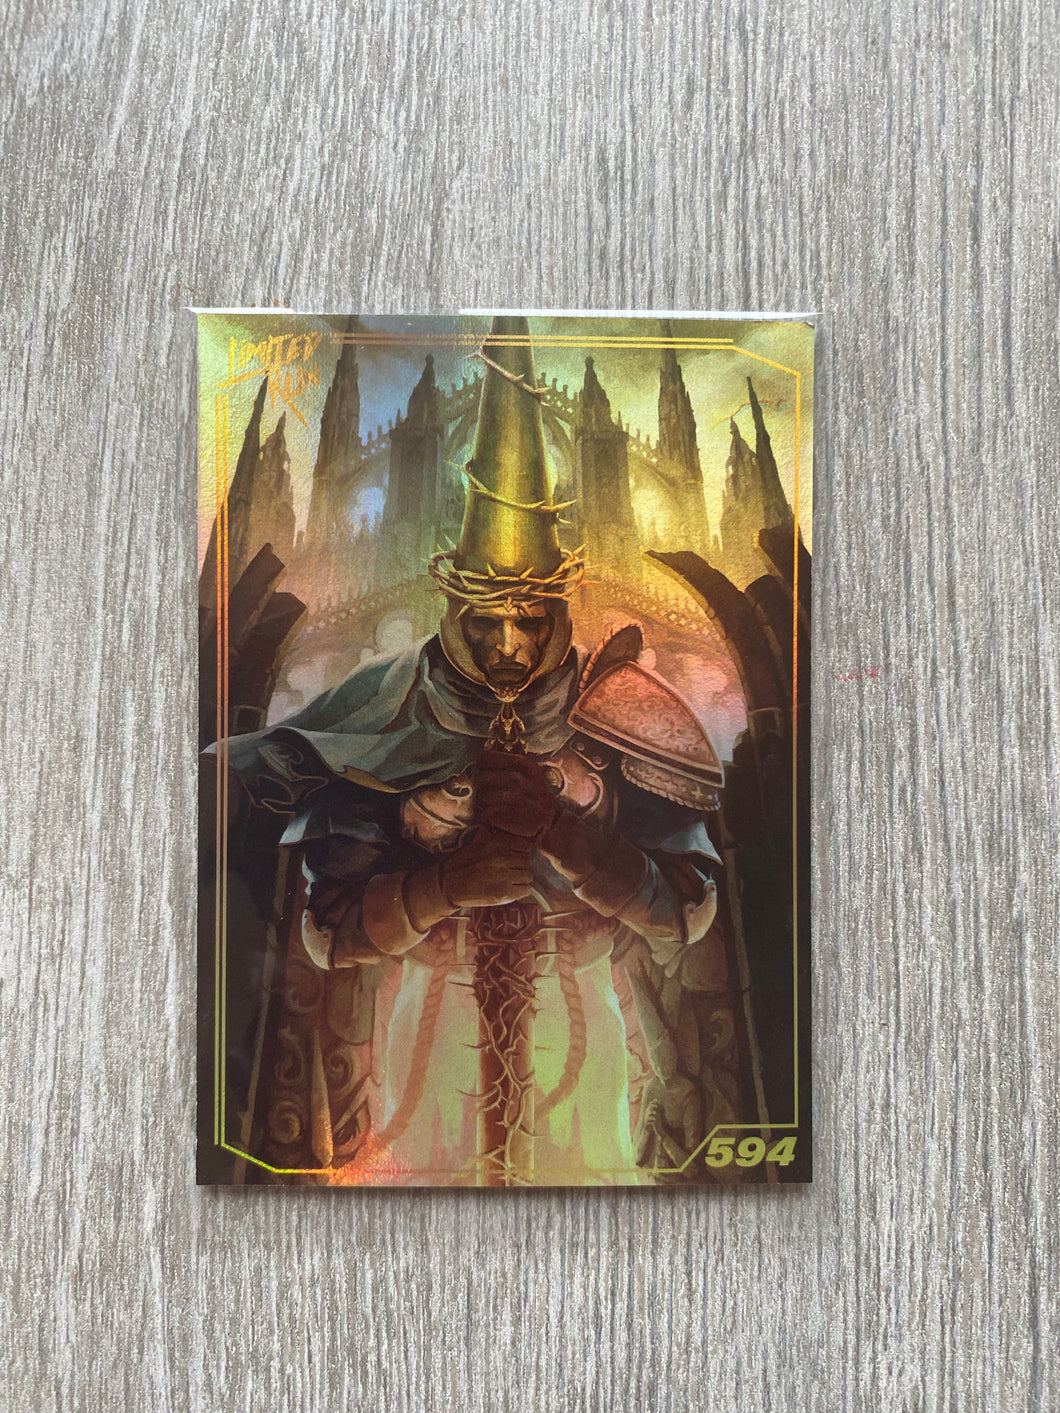 Gen1 #594 Gold Blasphemous Limited run games Trading card